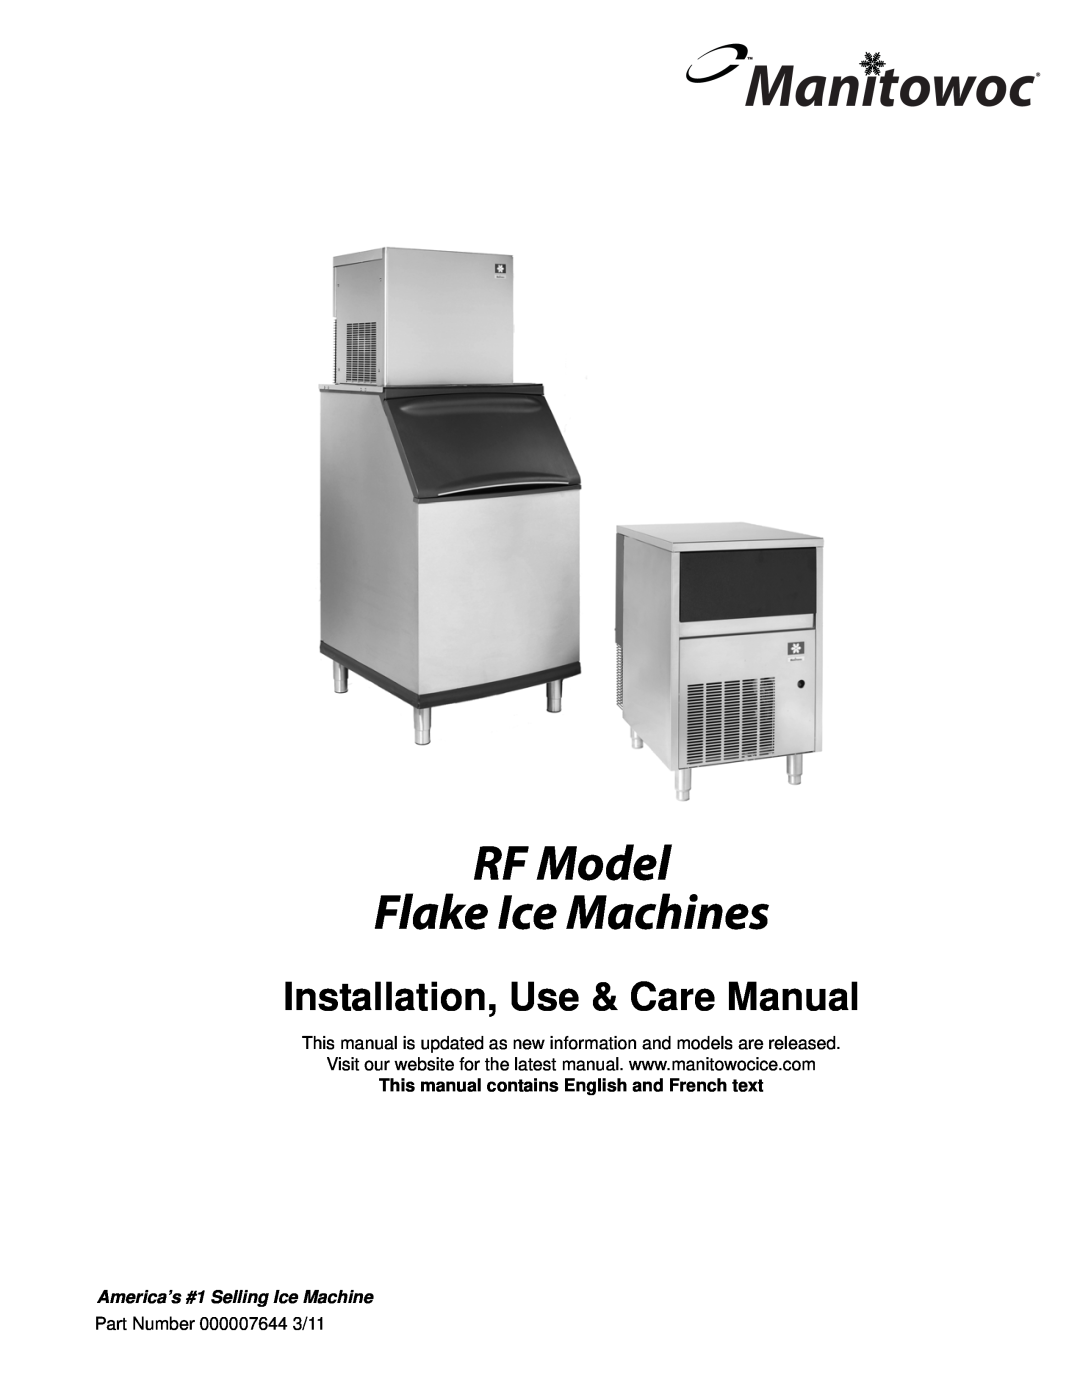 Manitowoc Ice manual Manitowoc, RF Model Flake Ice Machines, Installation, Use & Care Manual 